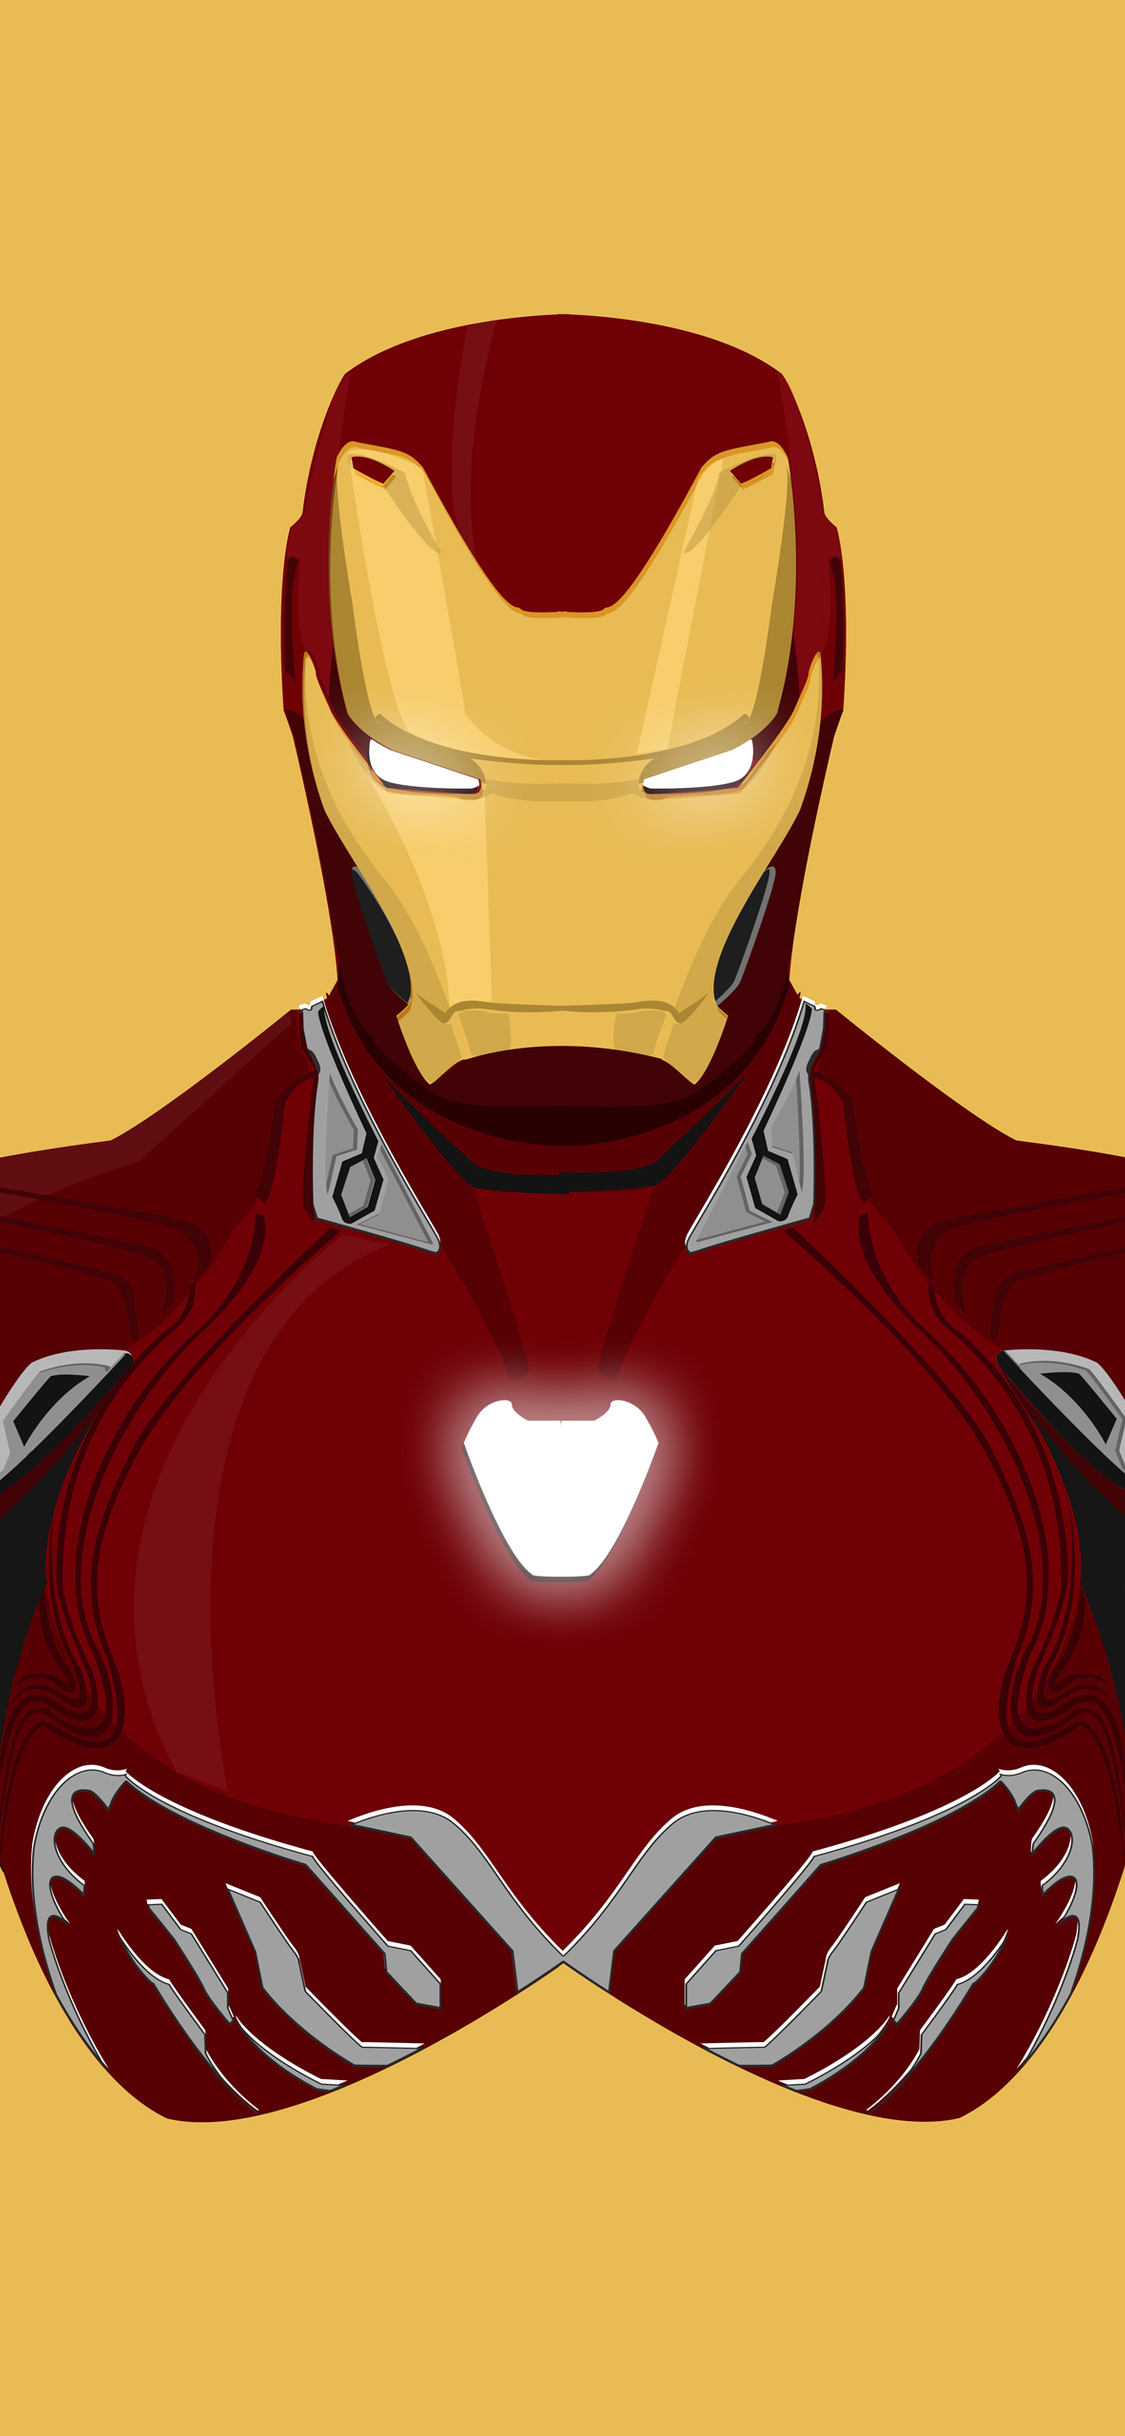 1125x2436 Iron Man Avengers Infinity War 2018 Minimalism ...